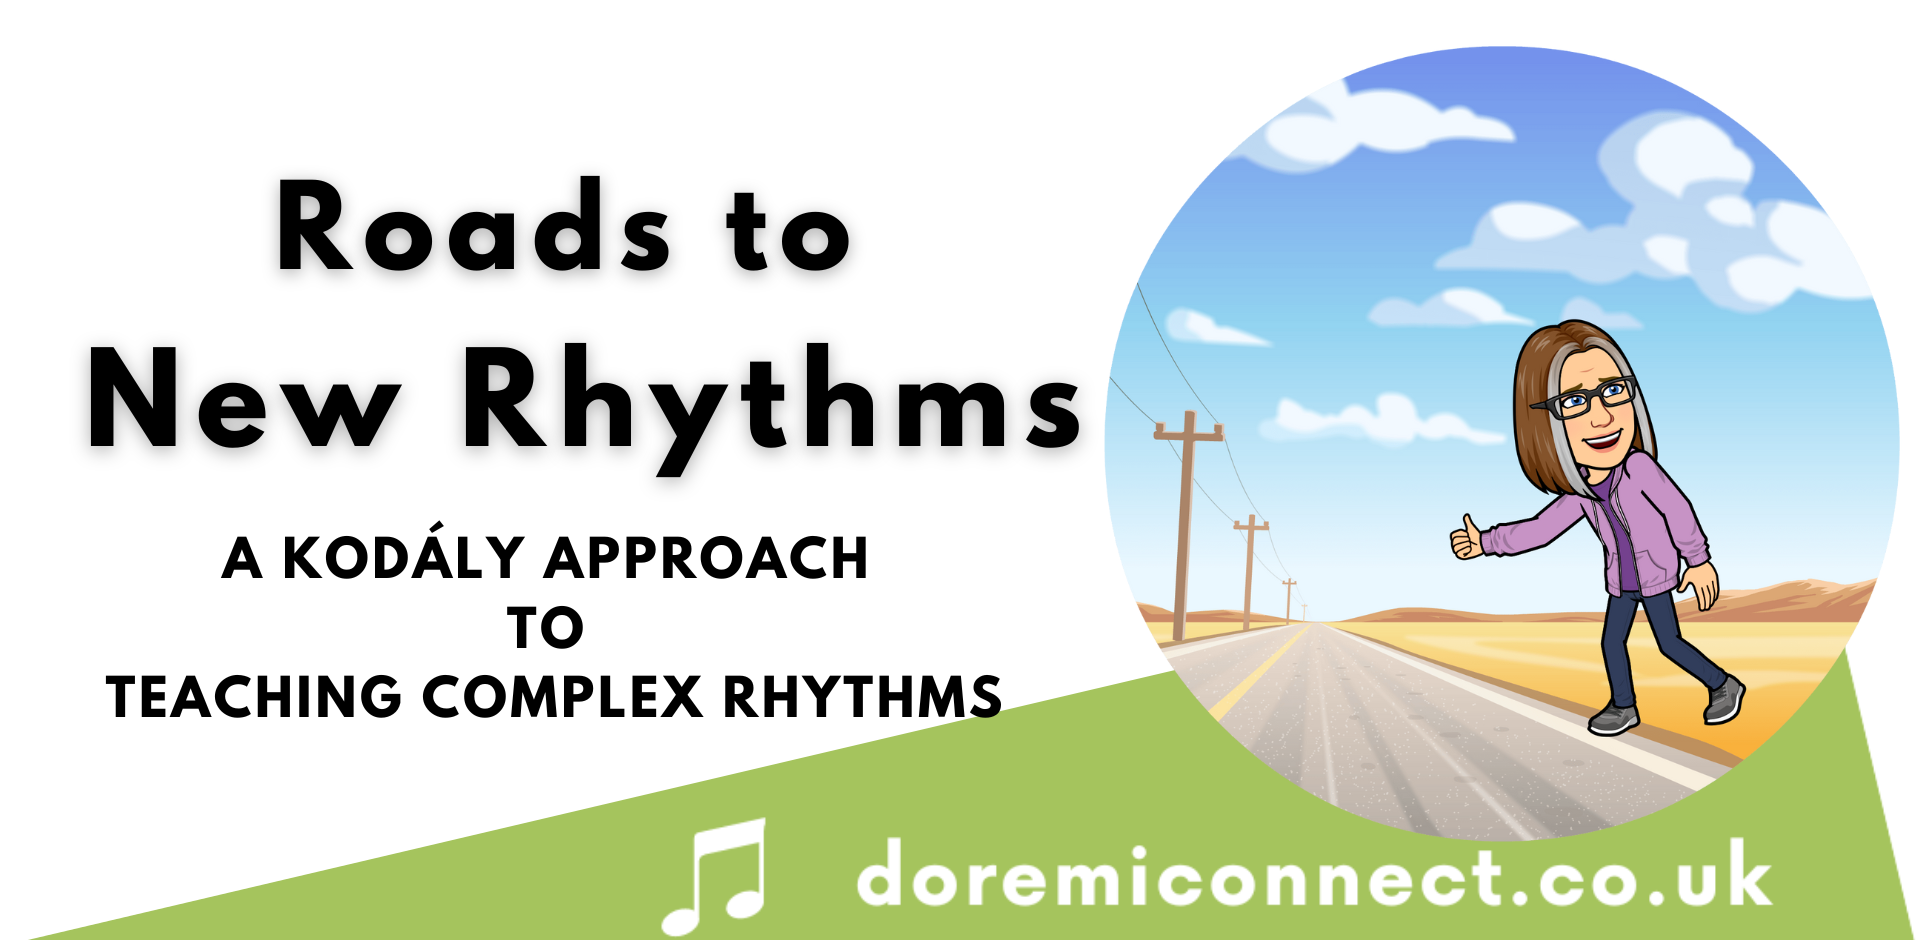 Teaching complex rhythms